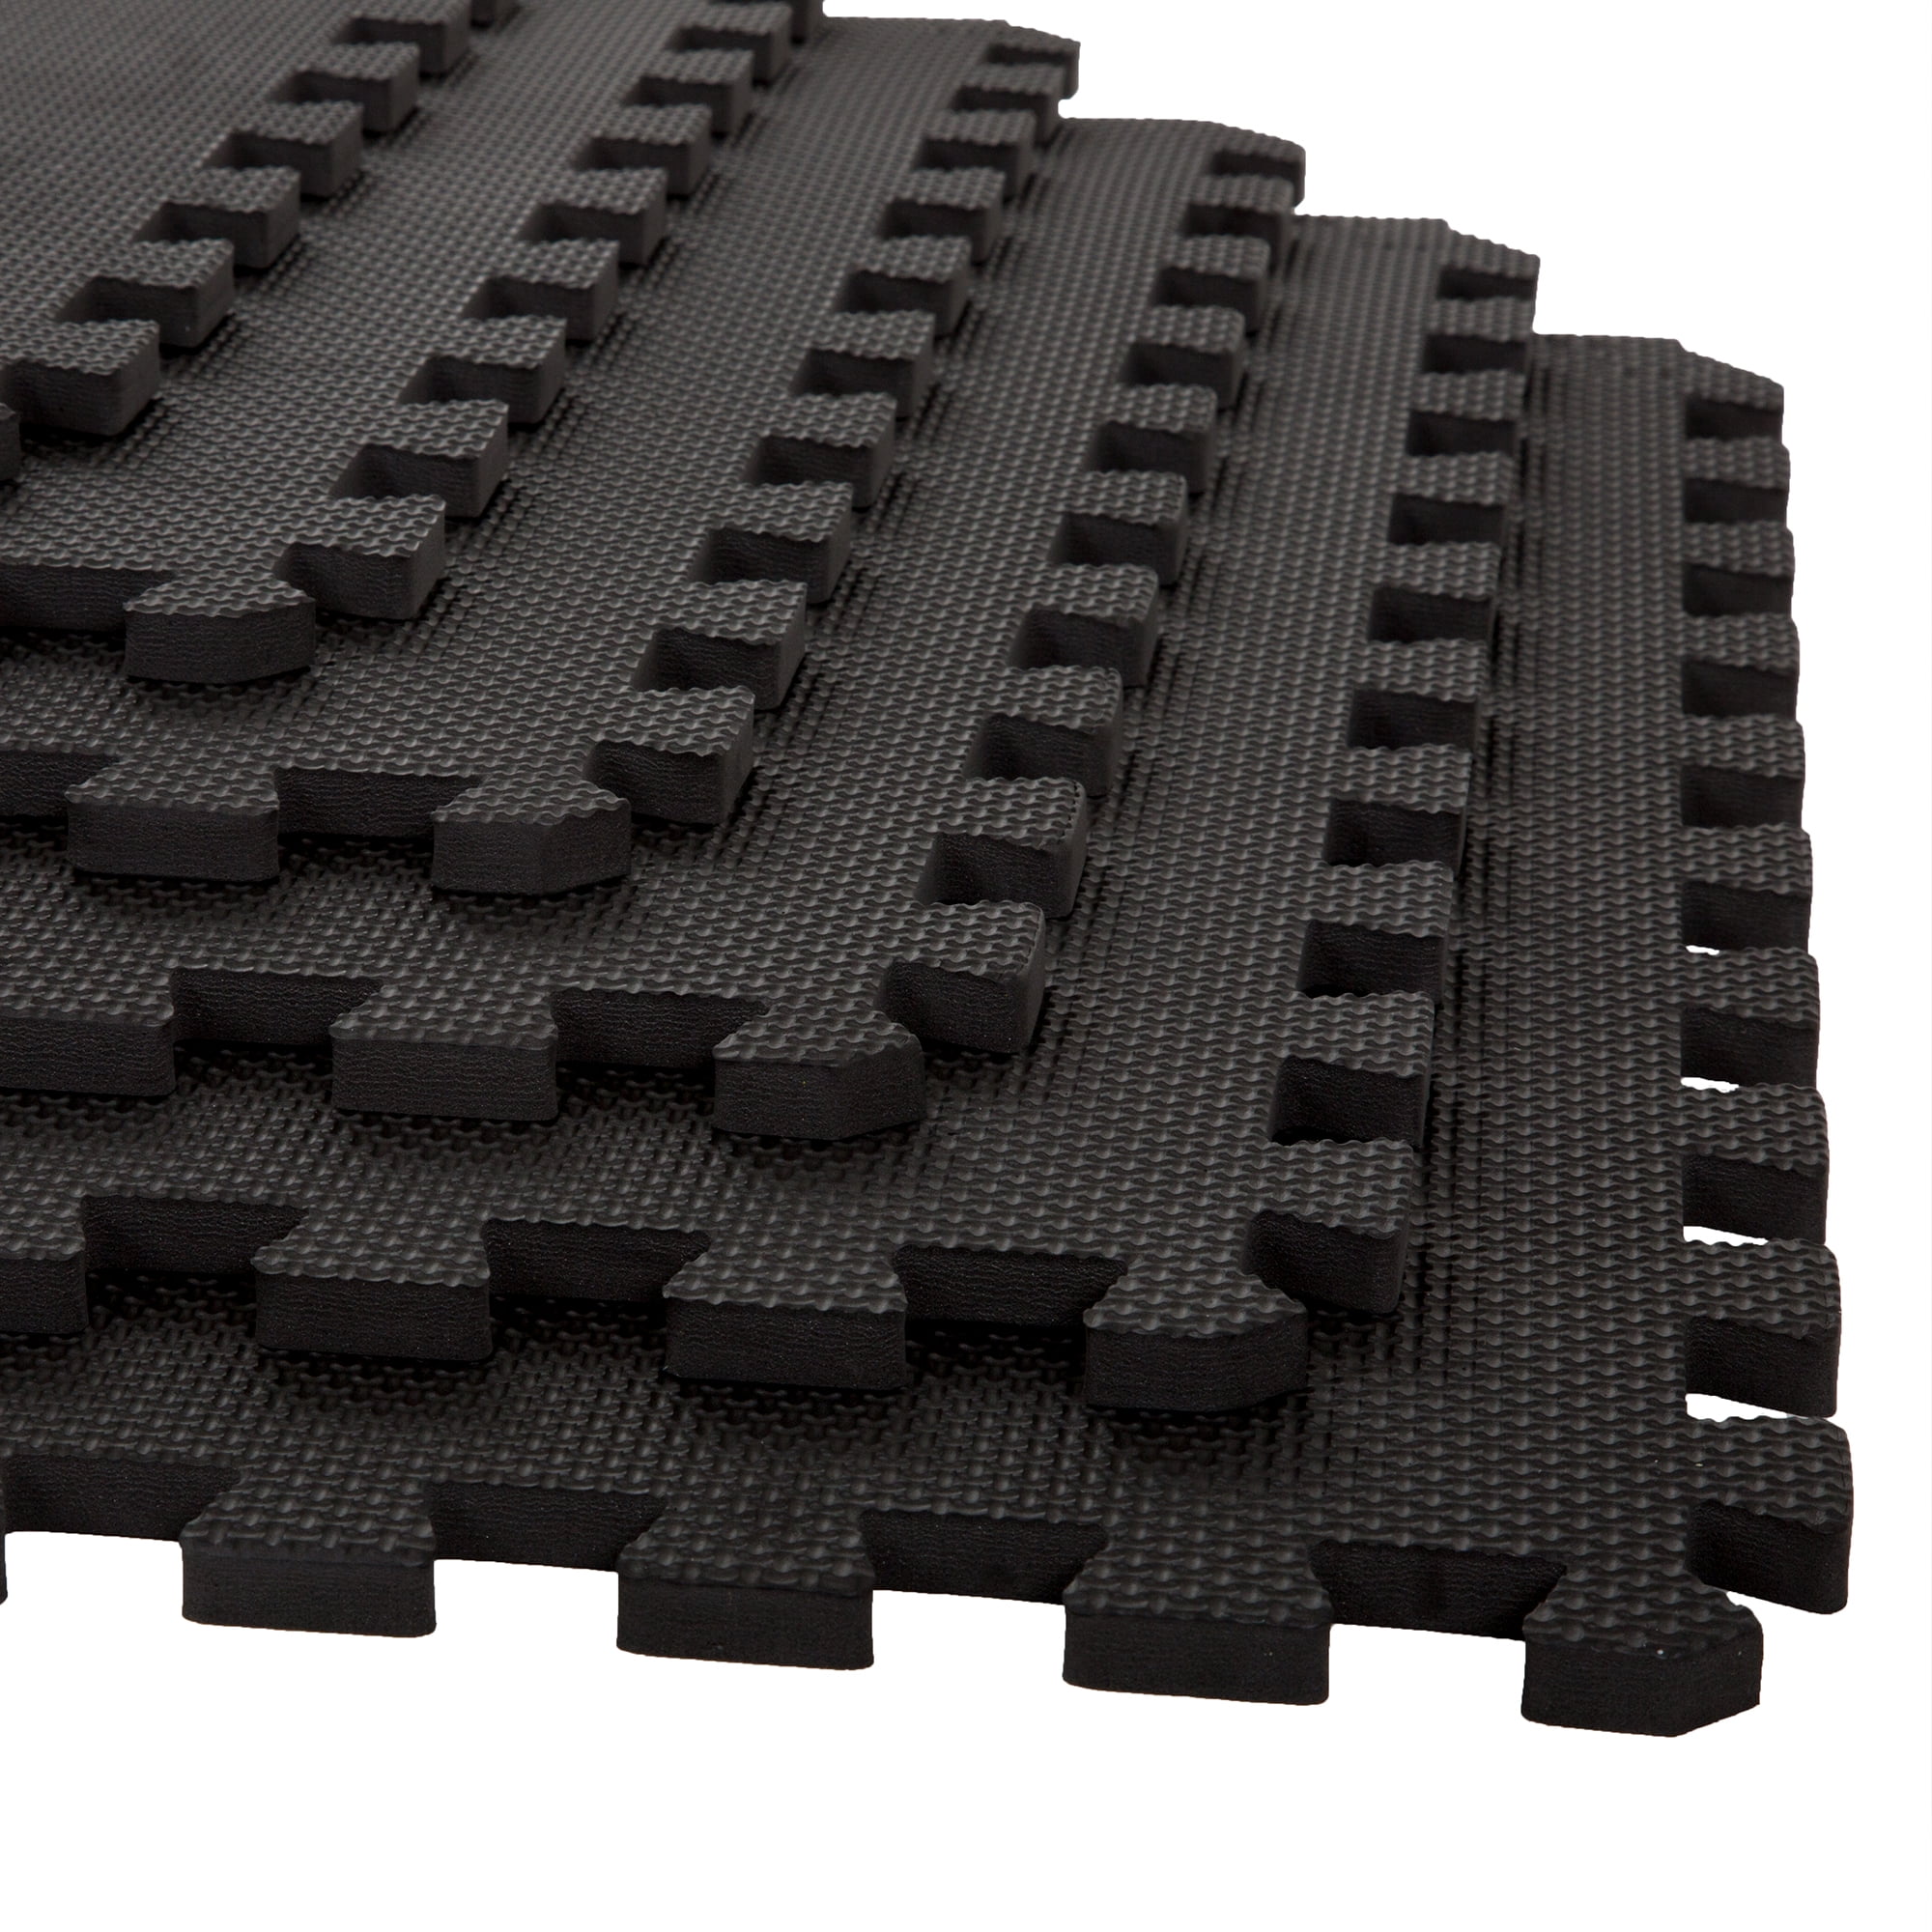 6 Large Black EVA Floor Mats Soft Foam Interlocking Gym Exercise Home Play 